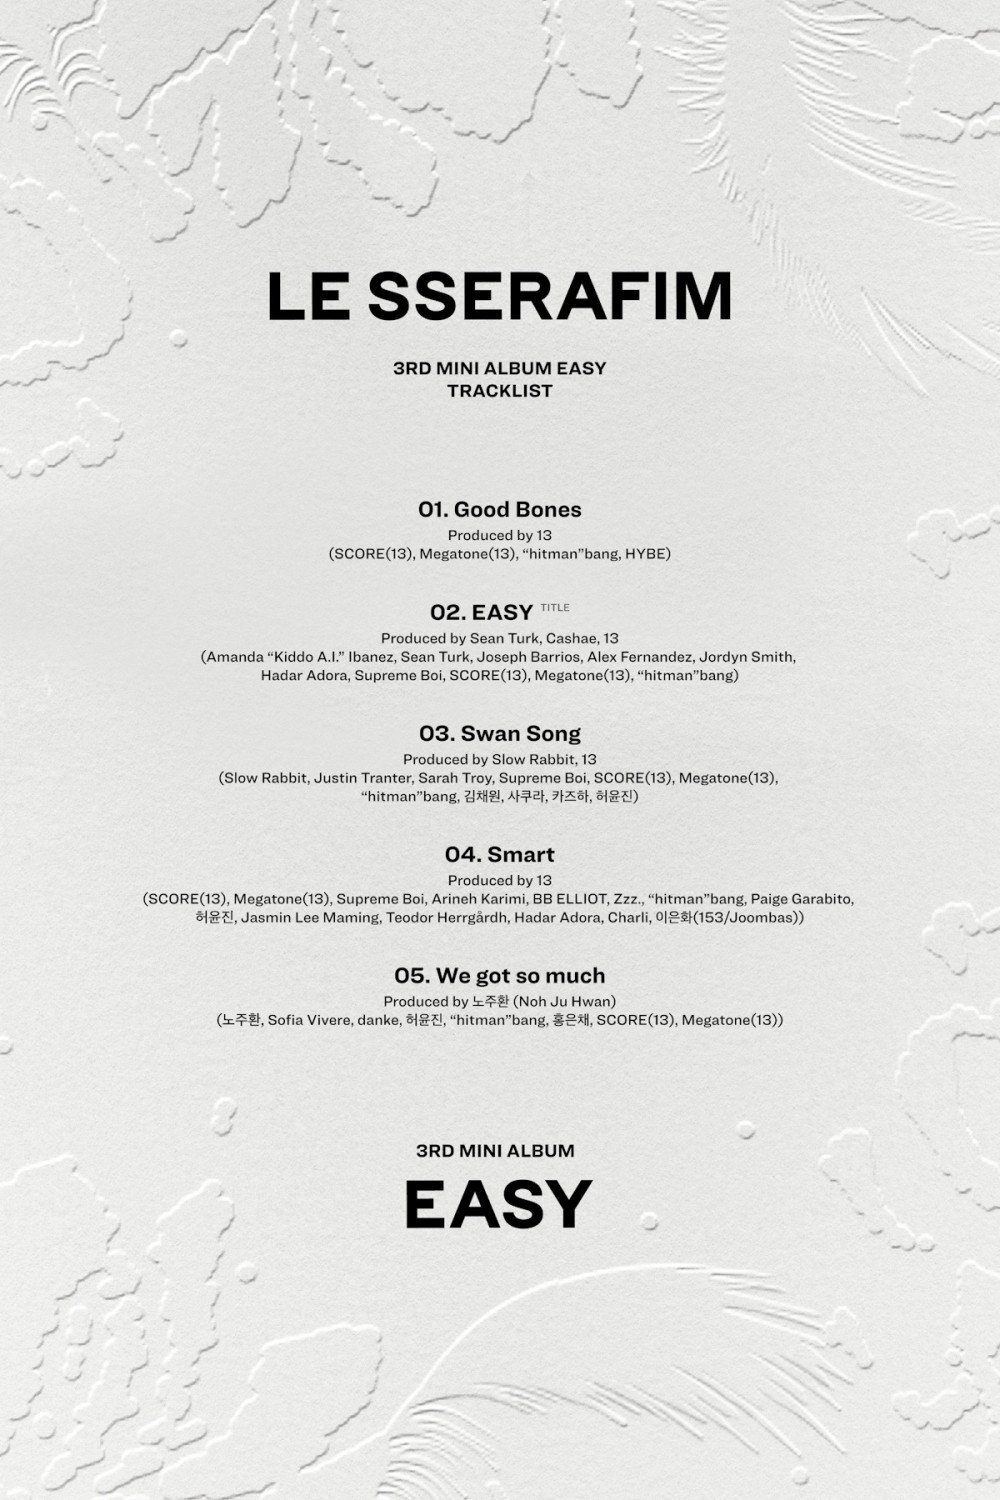 LE SSERAFIM Unveils Tracklist for Their Third Mini Album 'EASY' 002